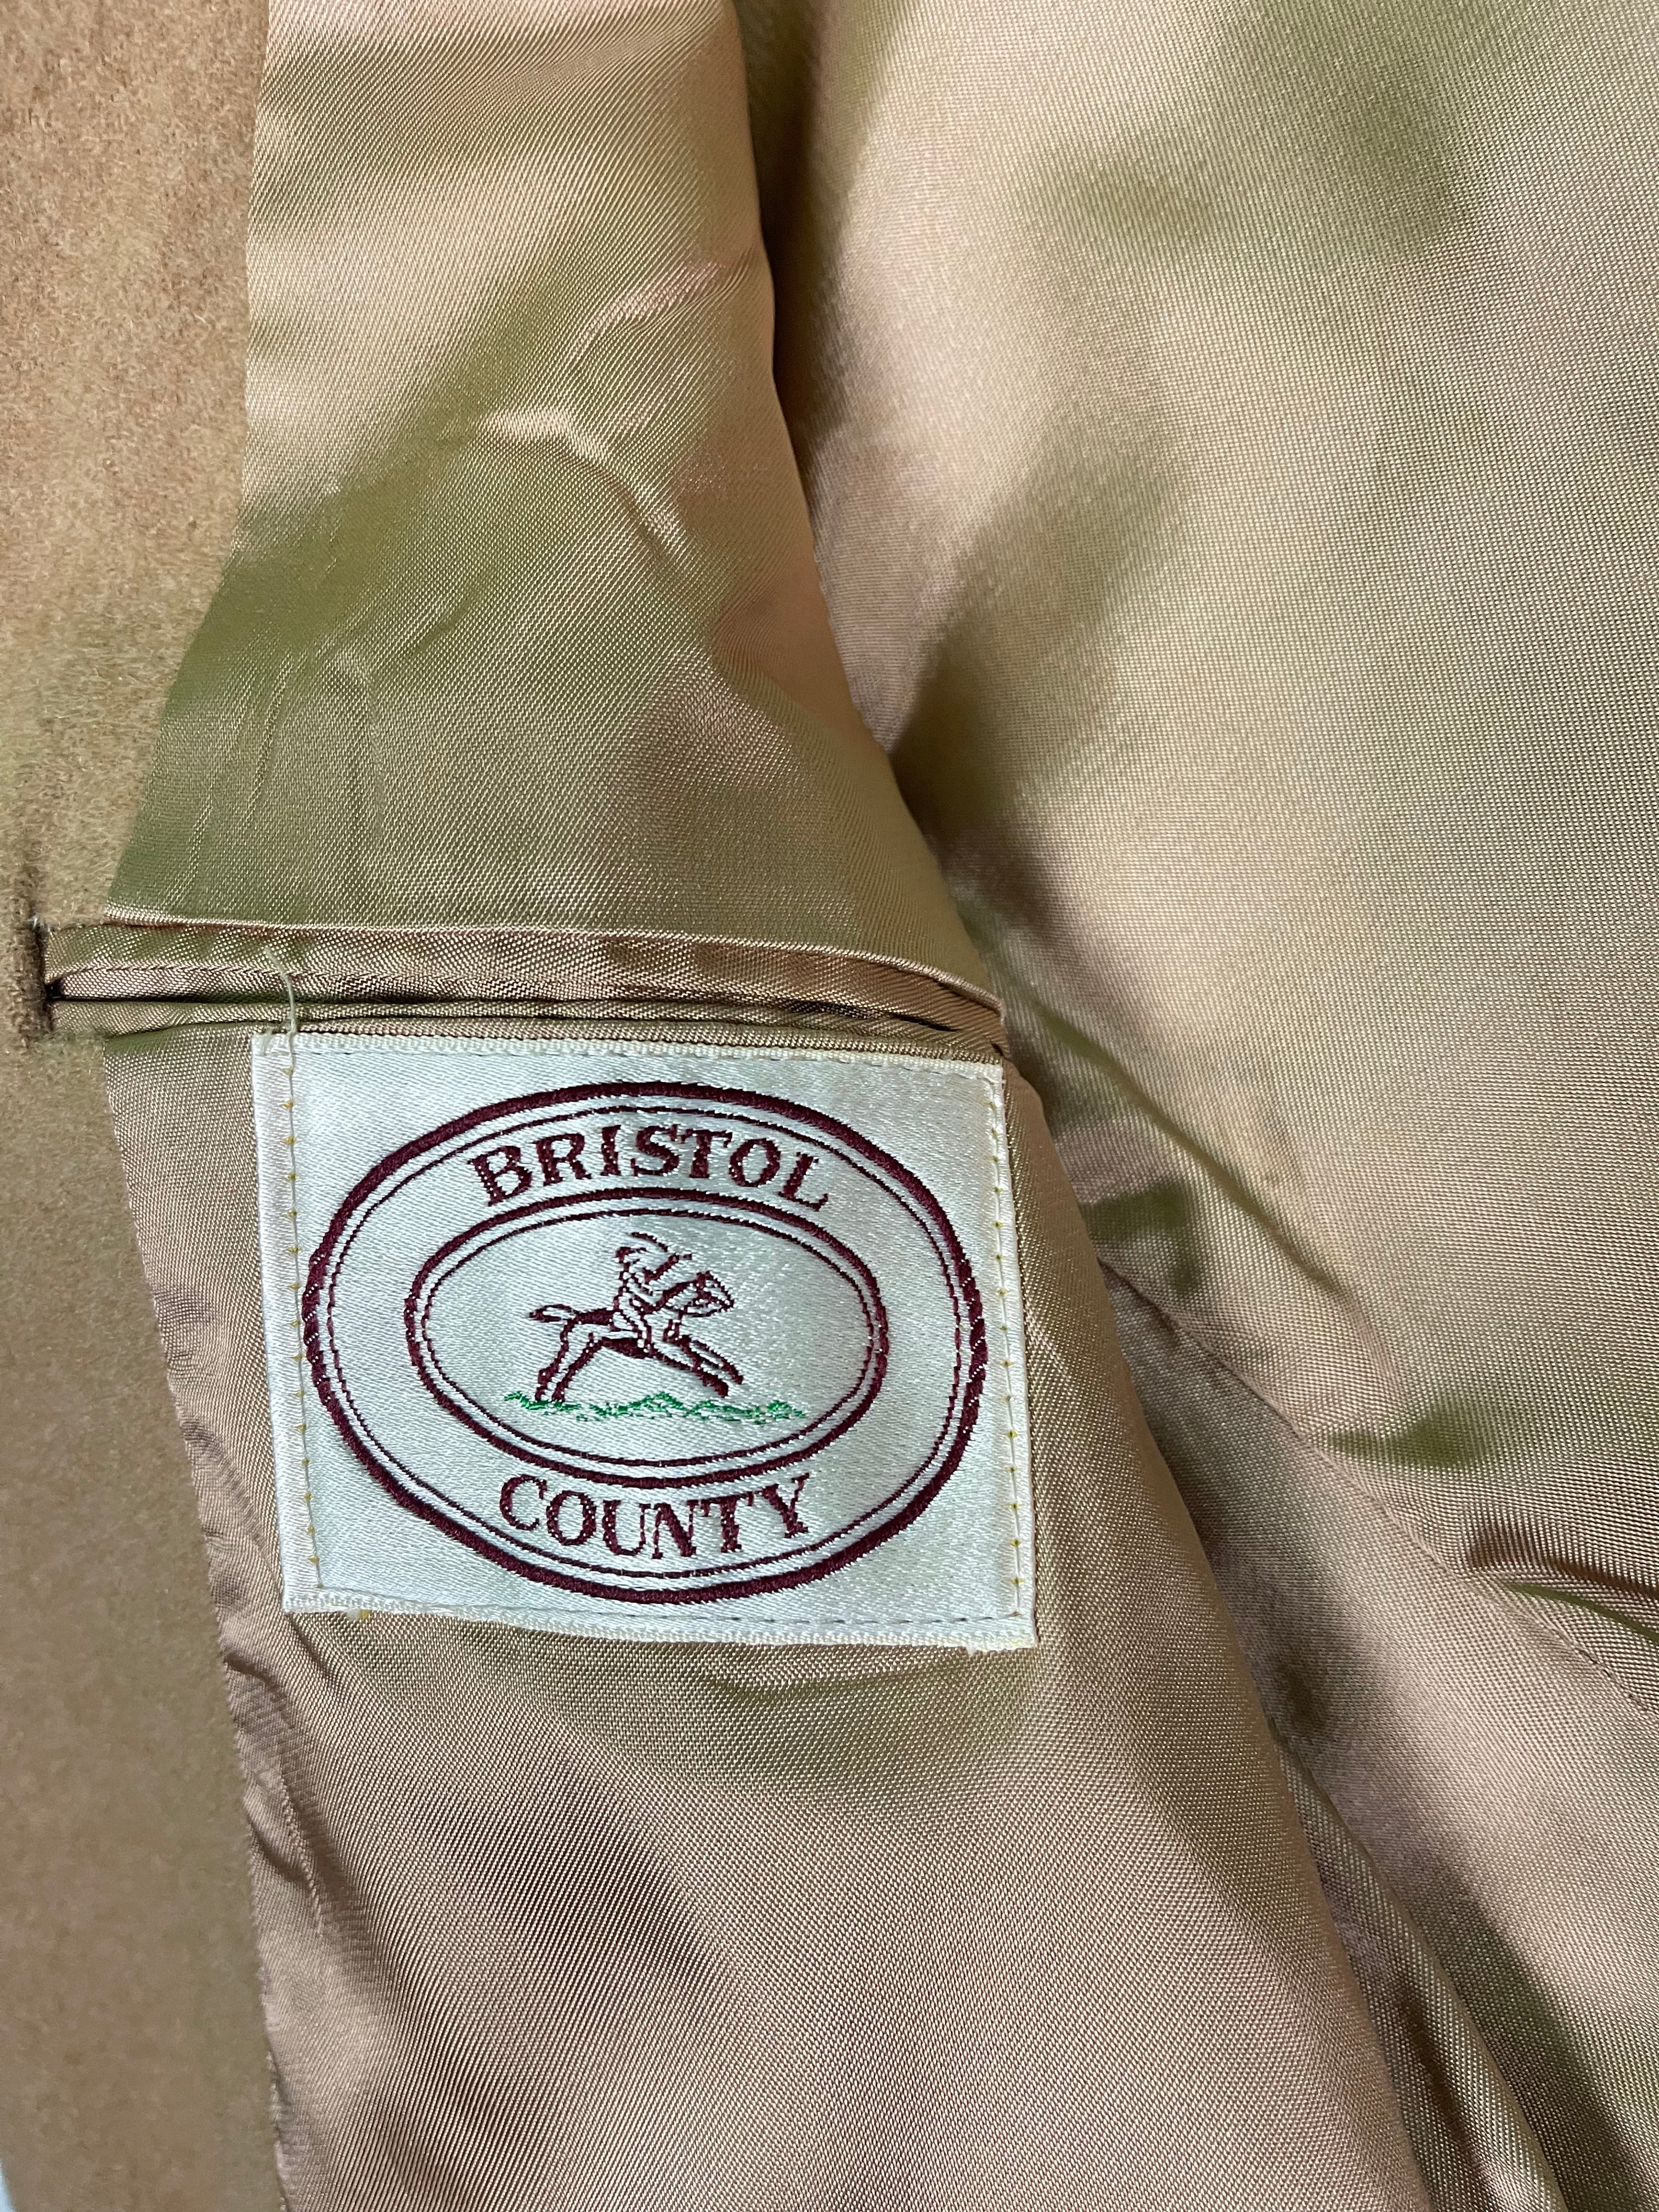 Bristol County Suit Jacket / Blazer